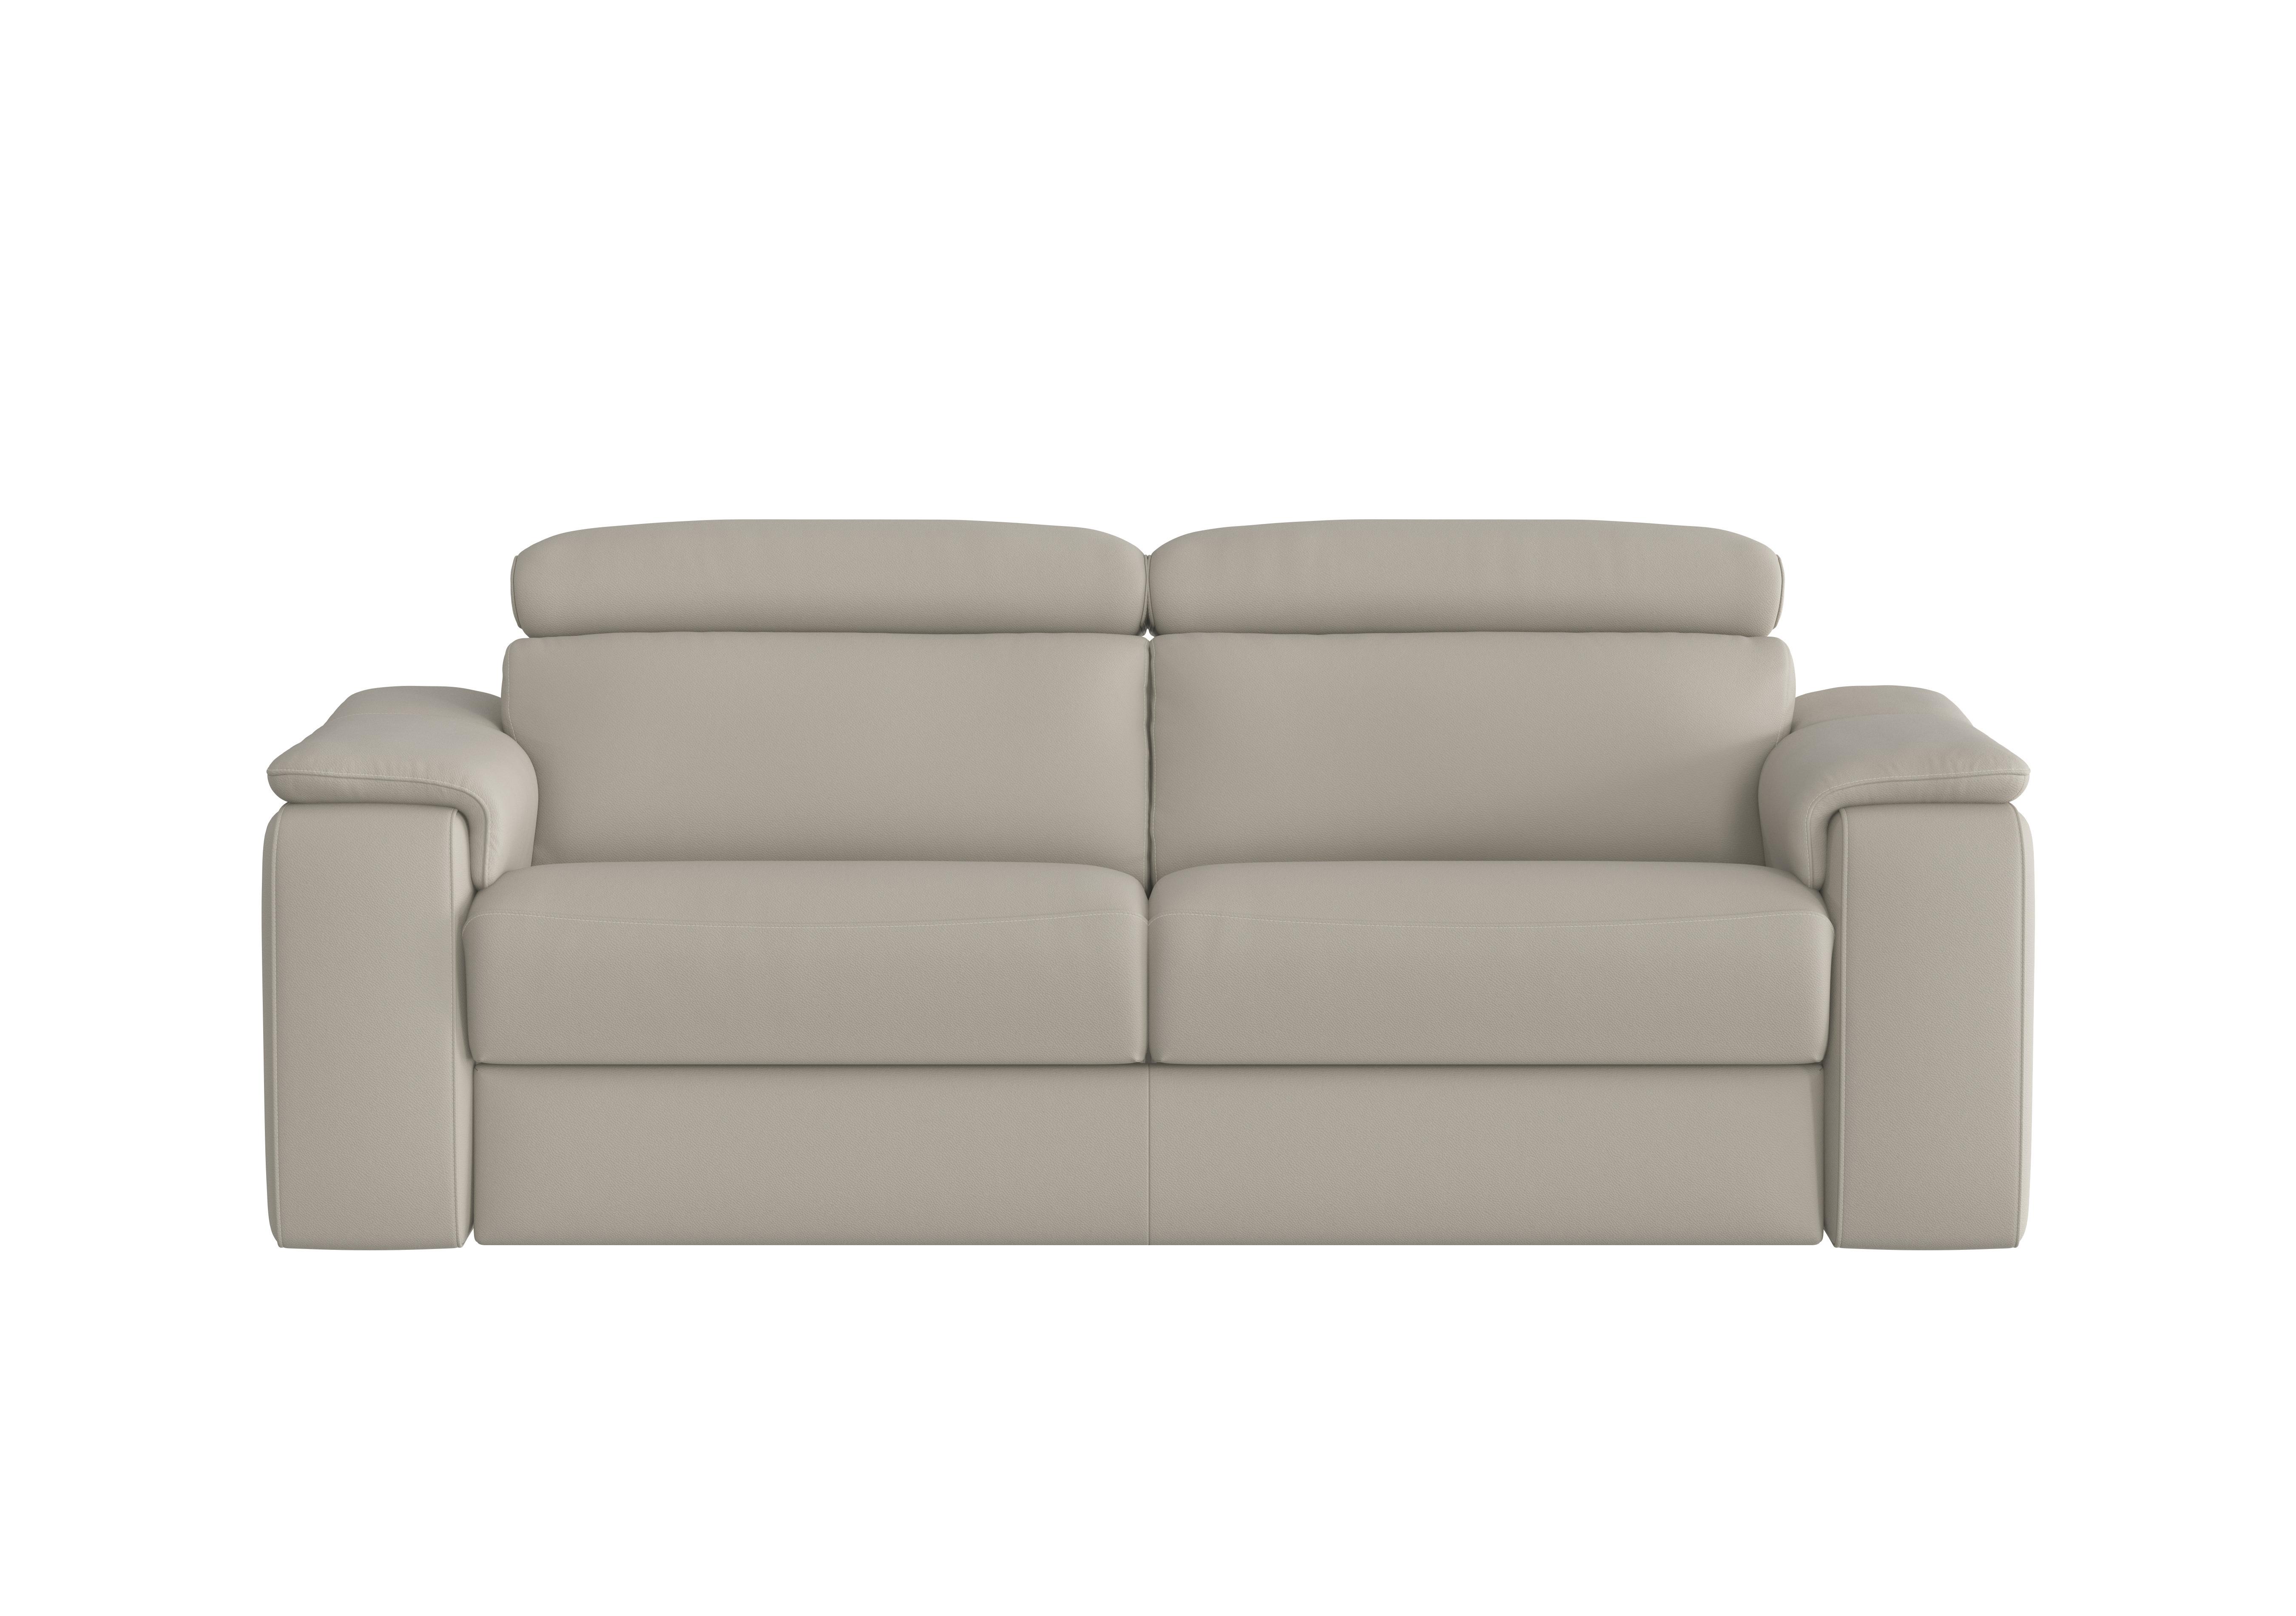 Davide 3 Seater Leather Sofa in 328 Torello Tortora on Furniture Village